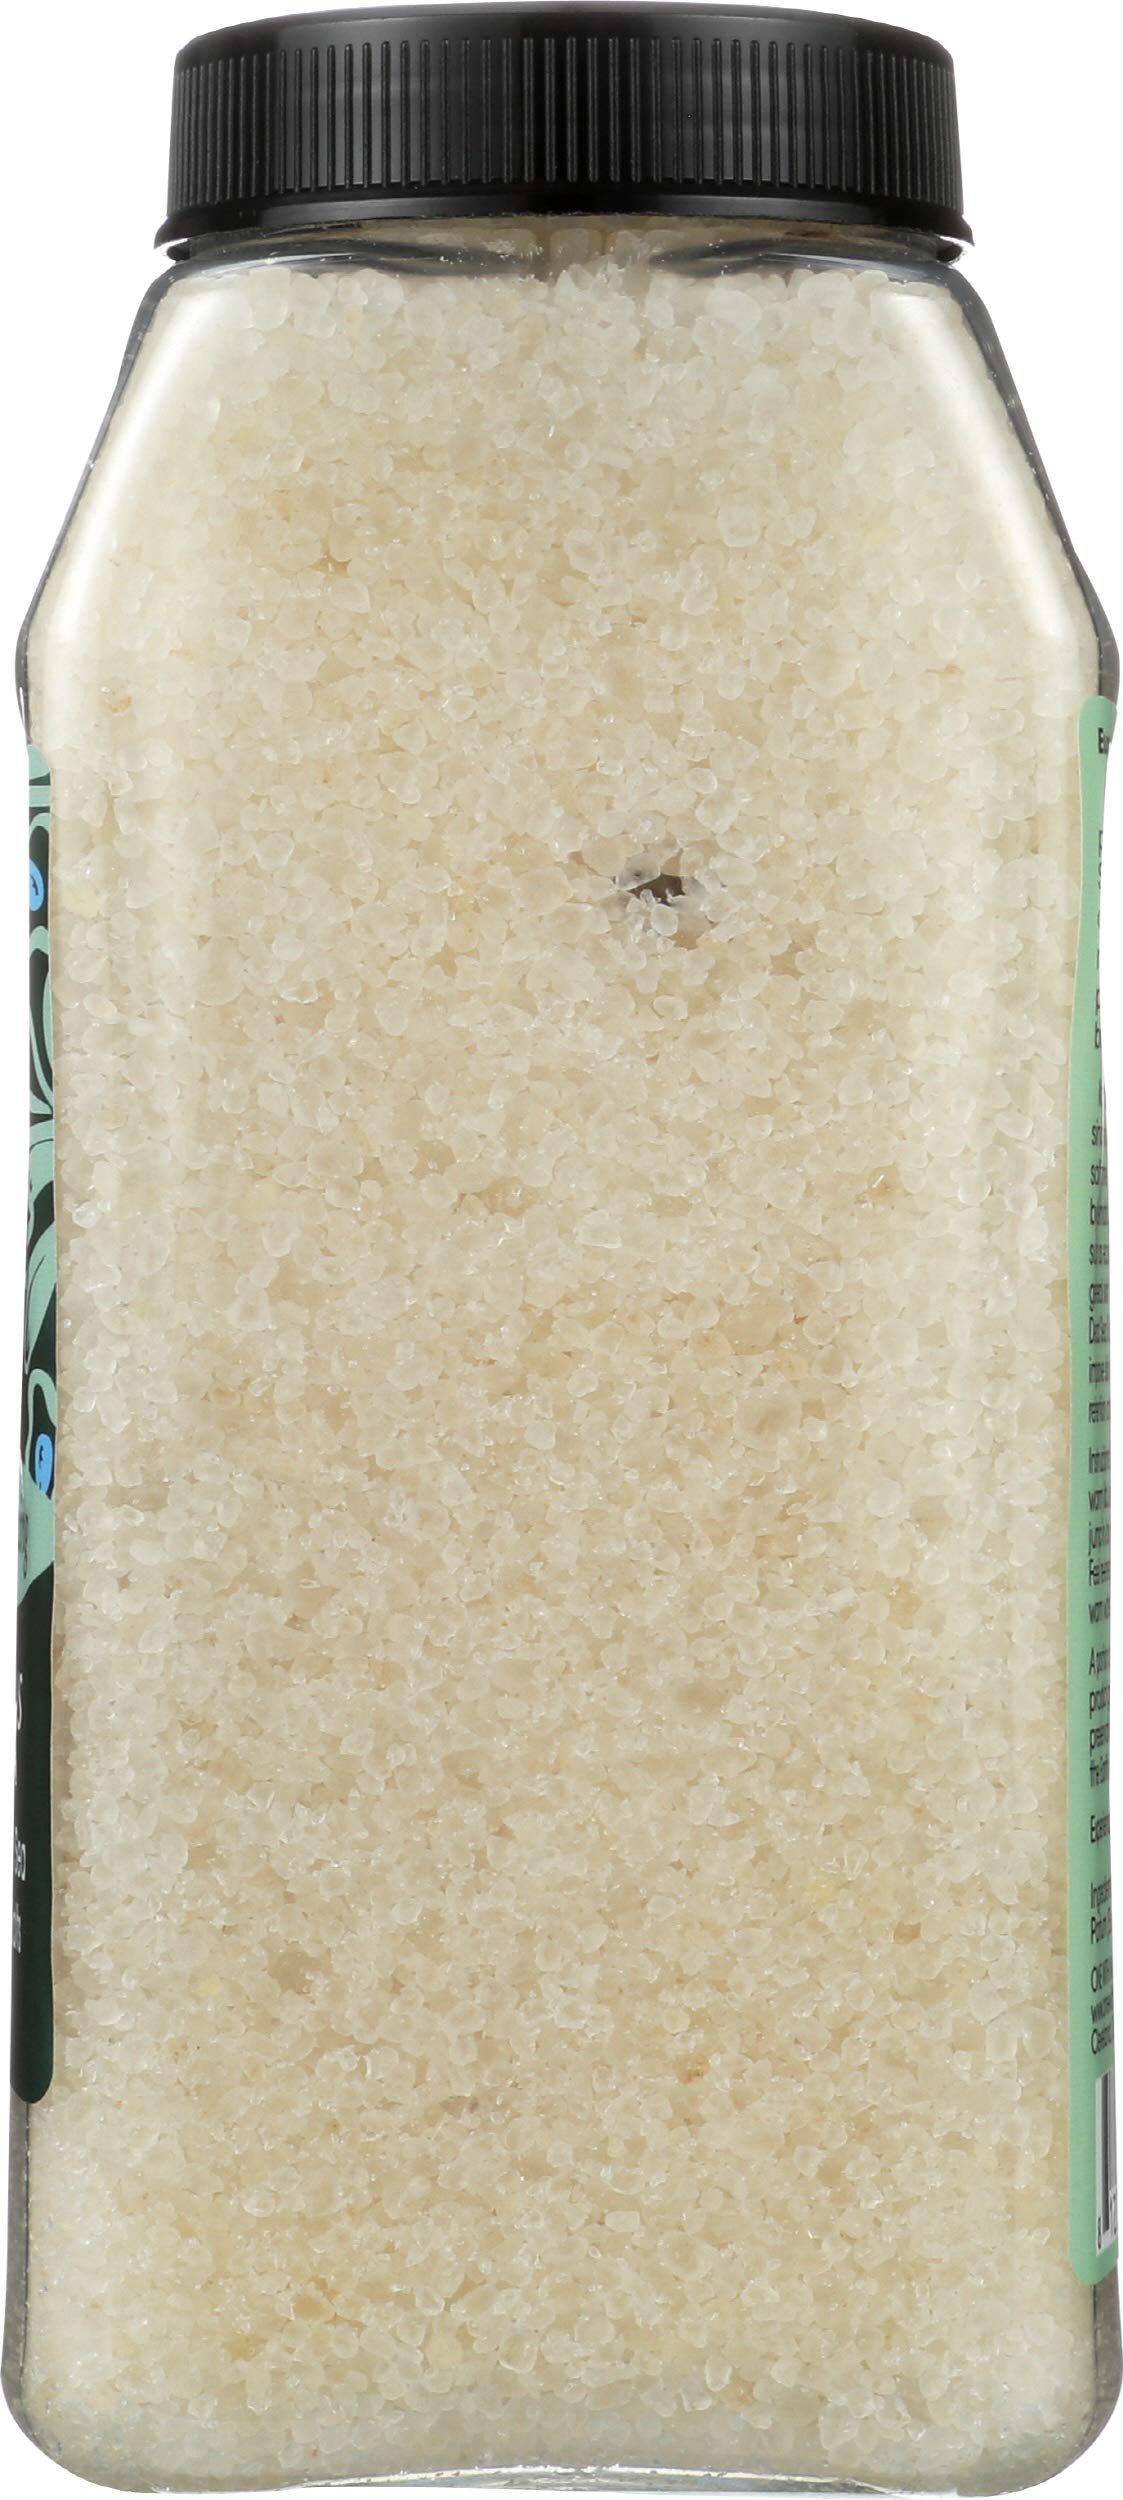 One With Nature Eucalyptus Bath Salt, 1.98 Pound